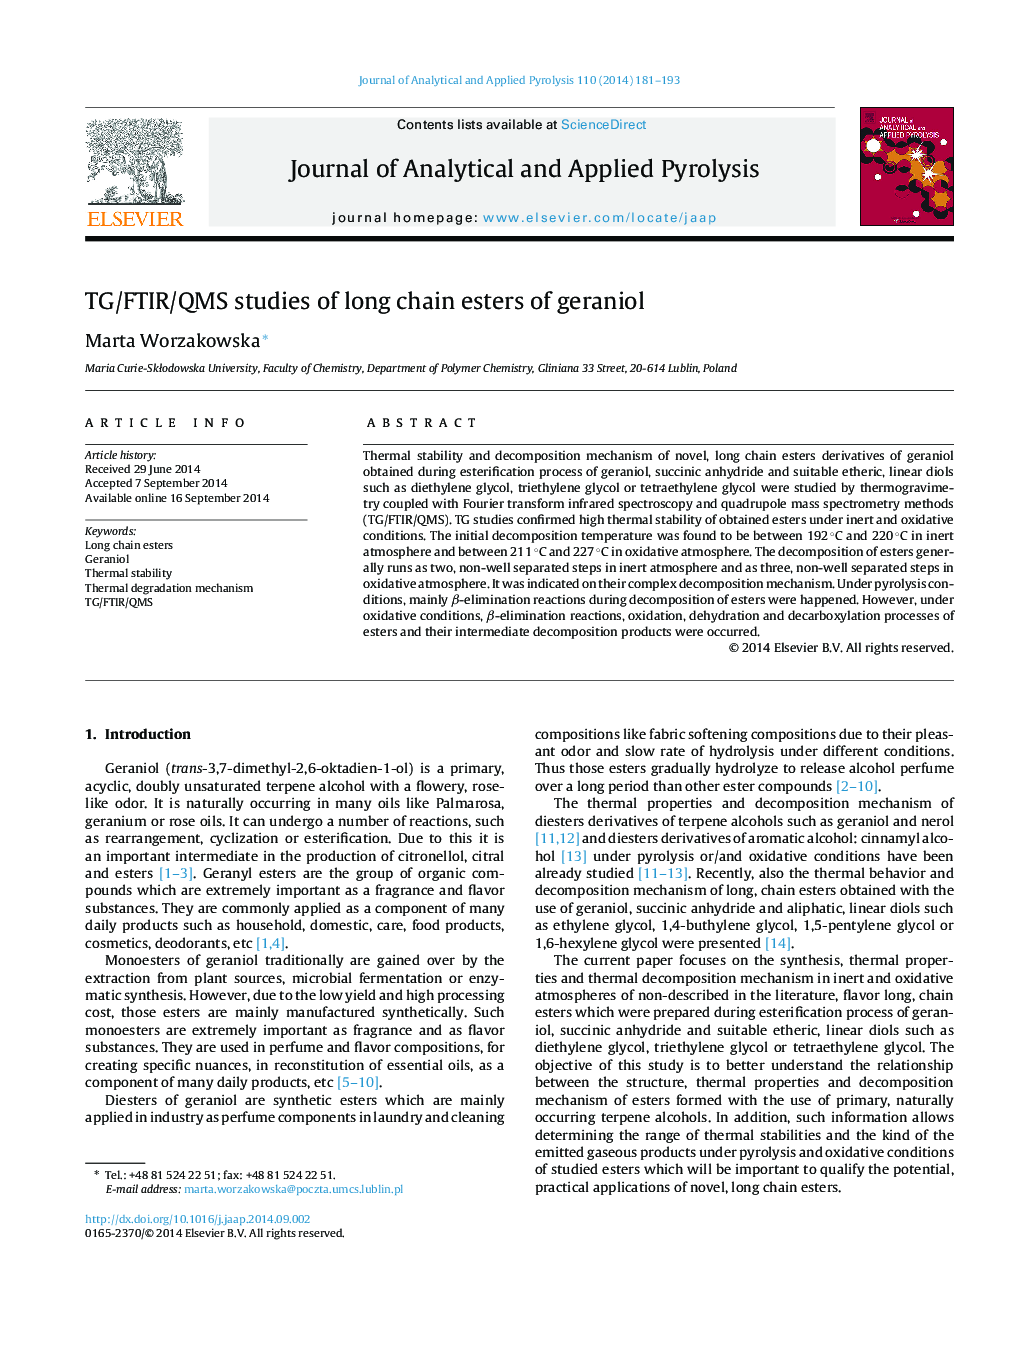 TG/FTIR/QMS studies of long chain esters of geraniol